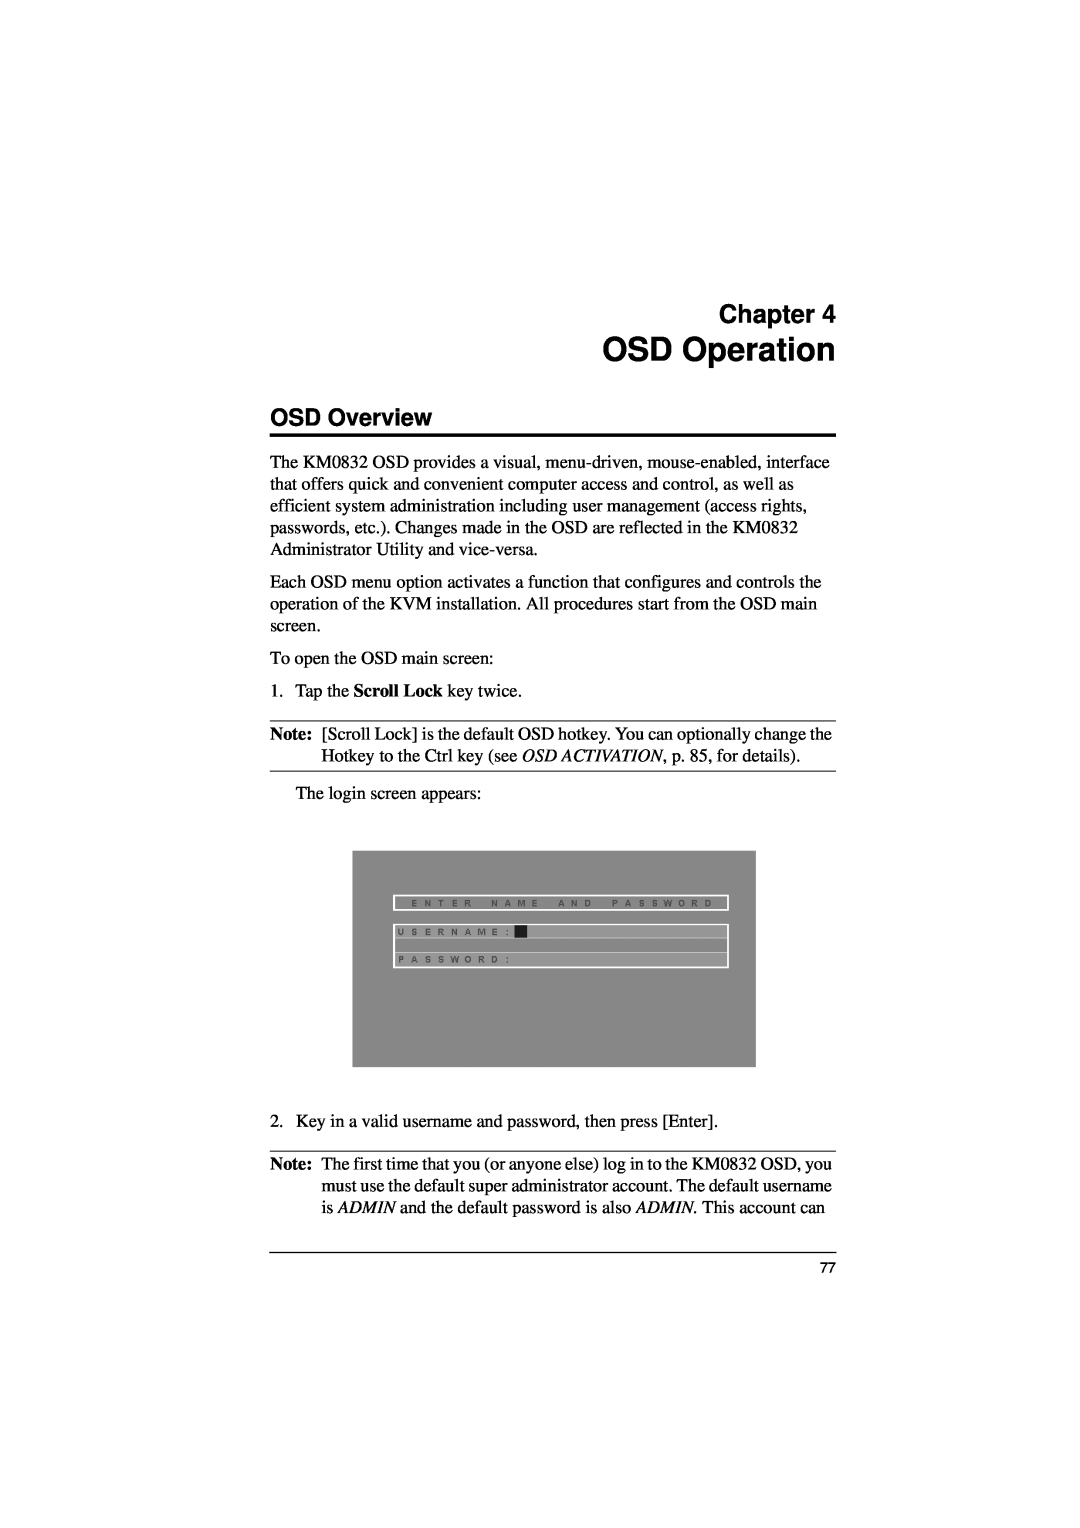 ATEN Technology KM0832 user manual OSD Operation, OSD Overview, Chapter 